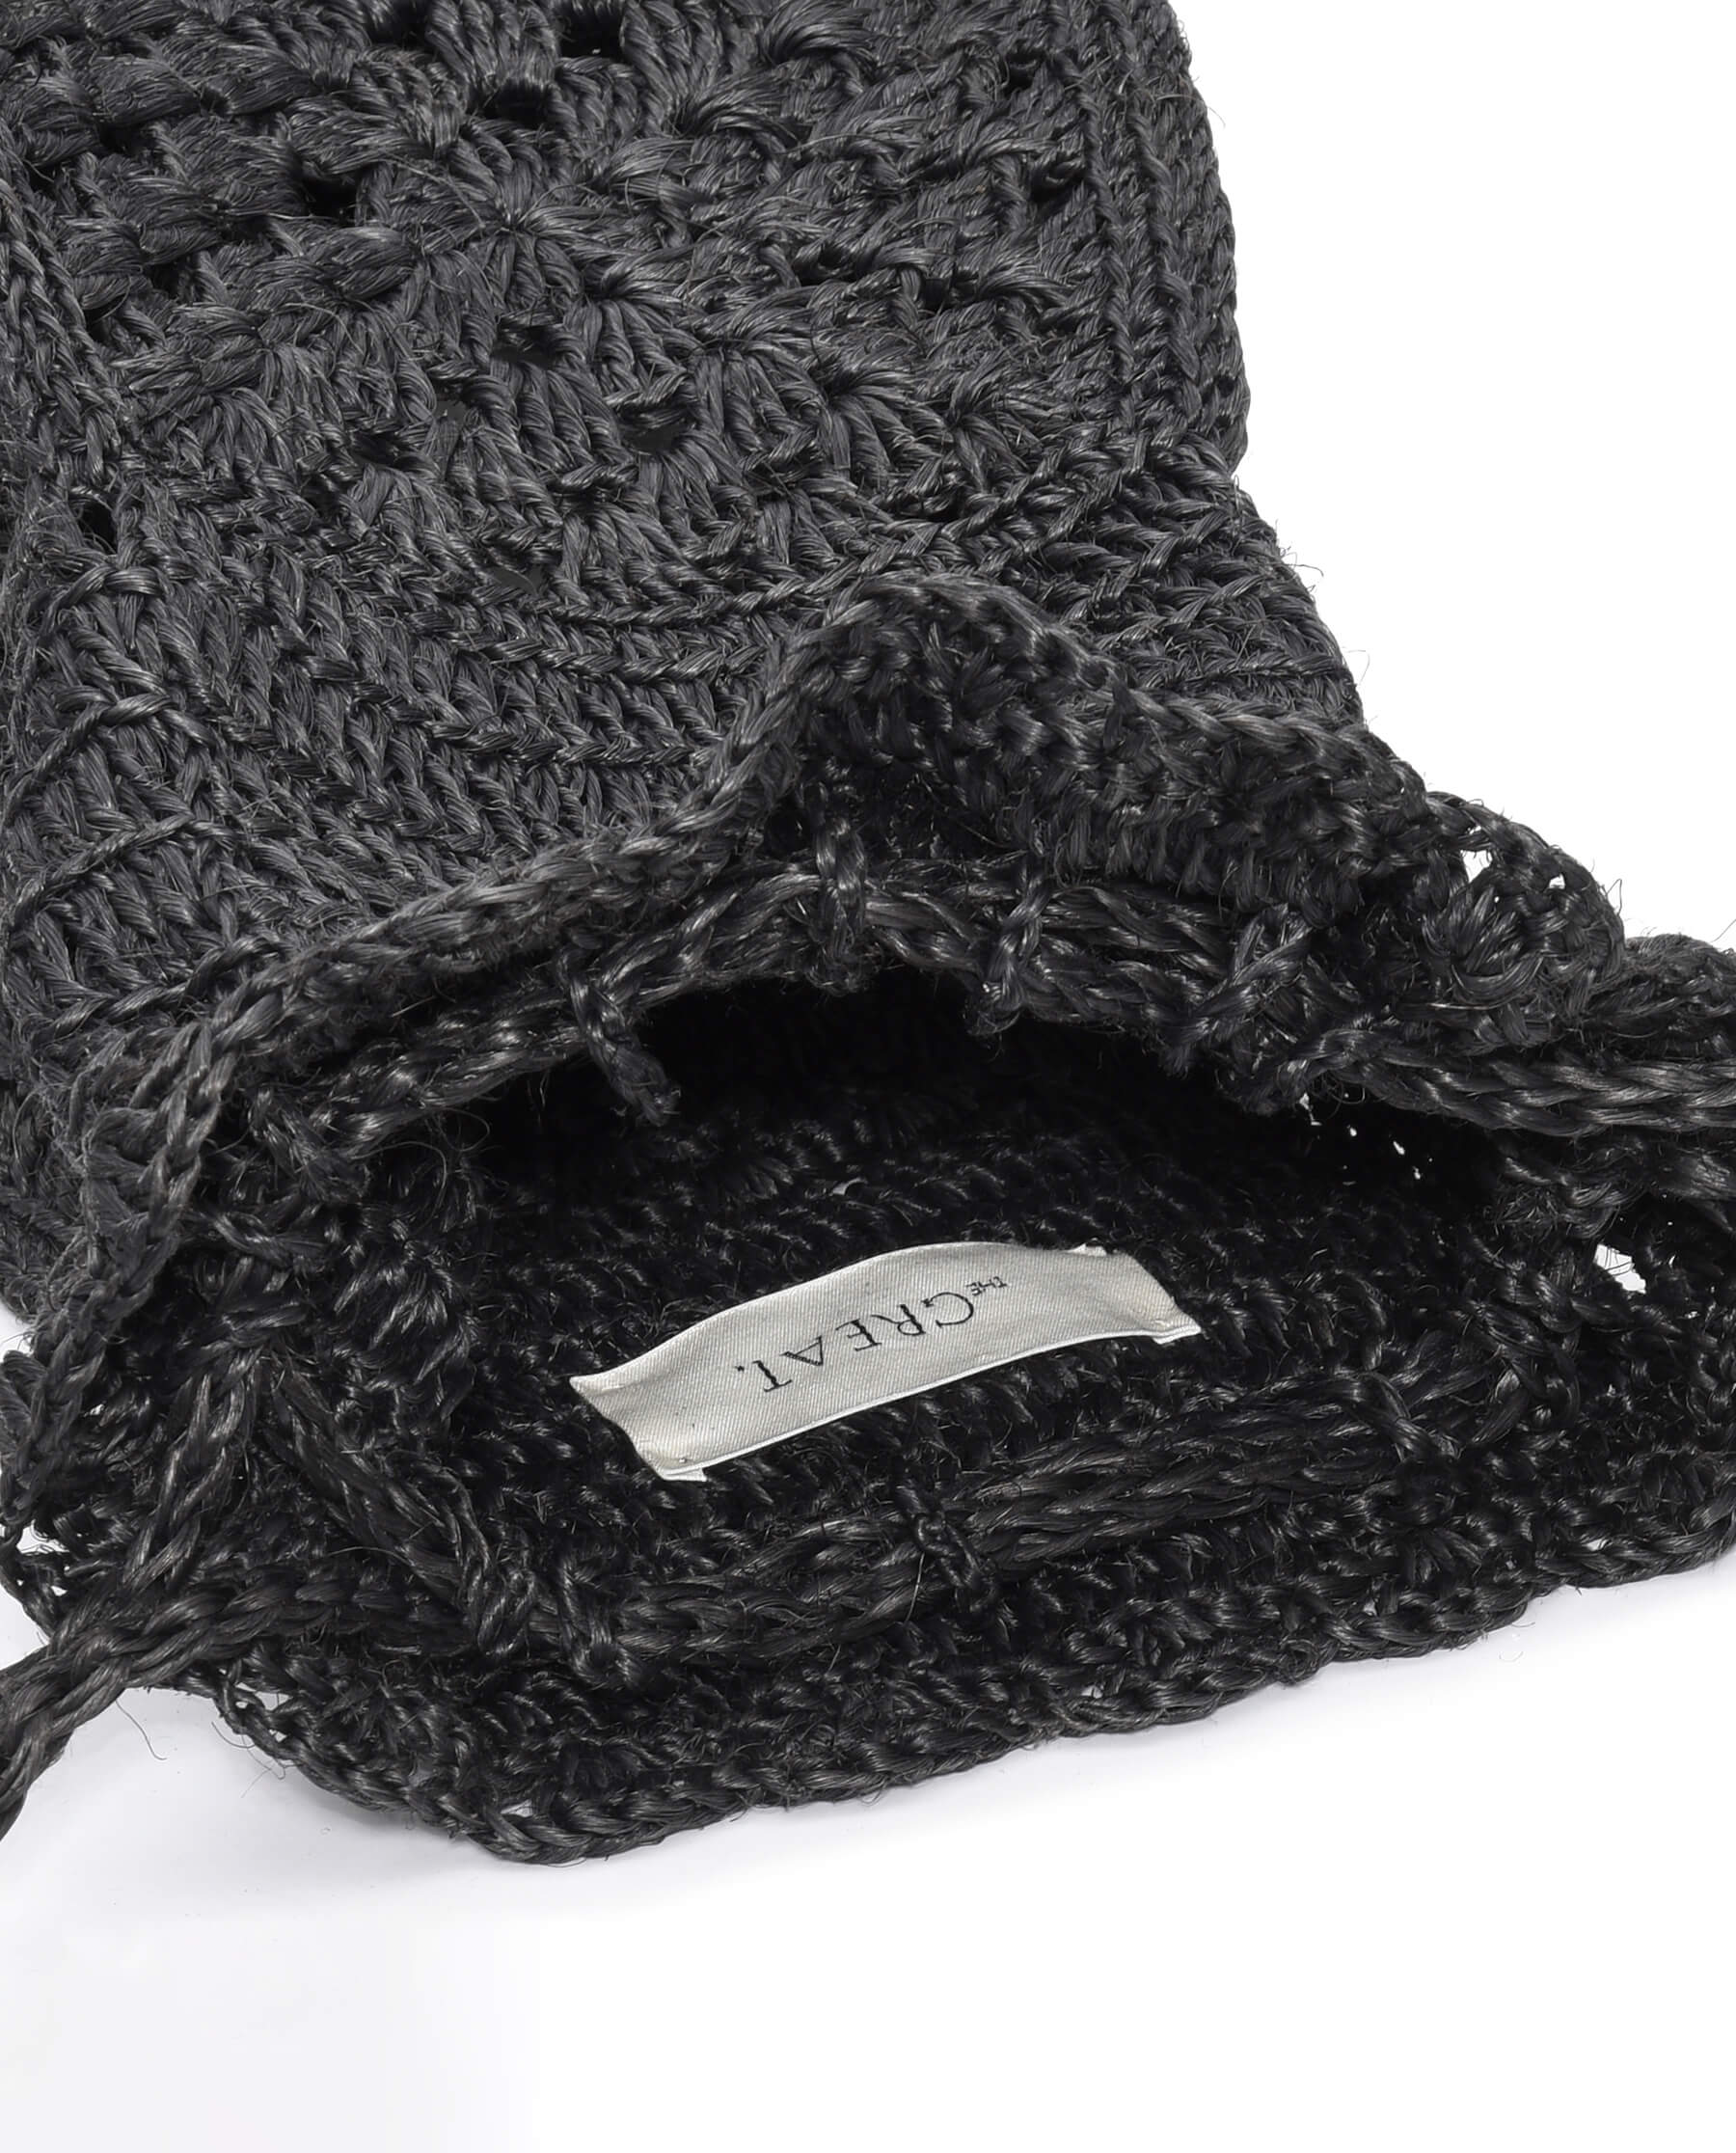 The Crochet Drawstring Bag. -- Black ACCESSORIES THE GREAT. SU23